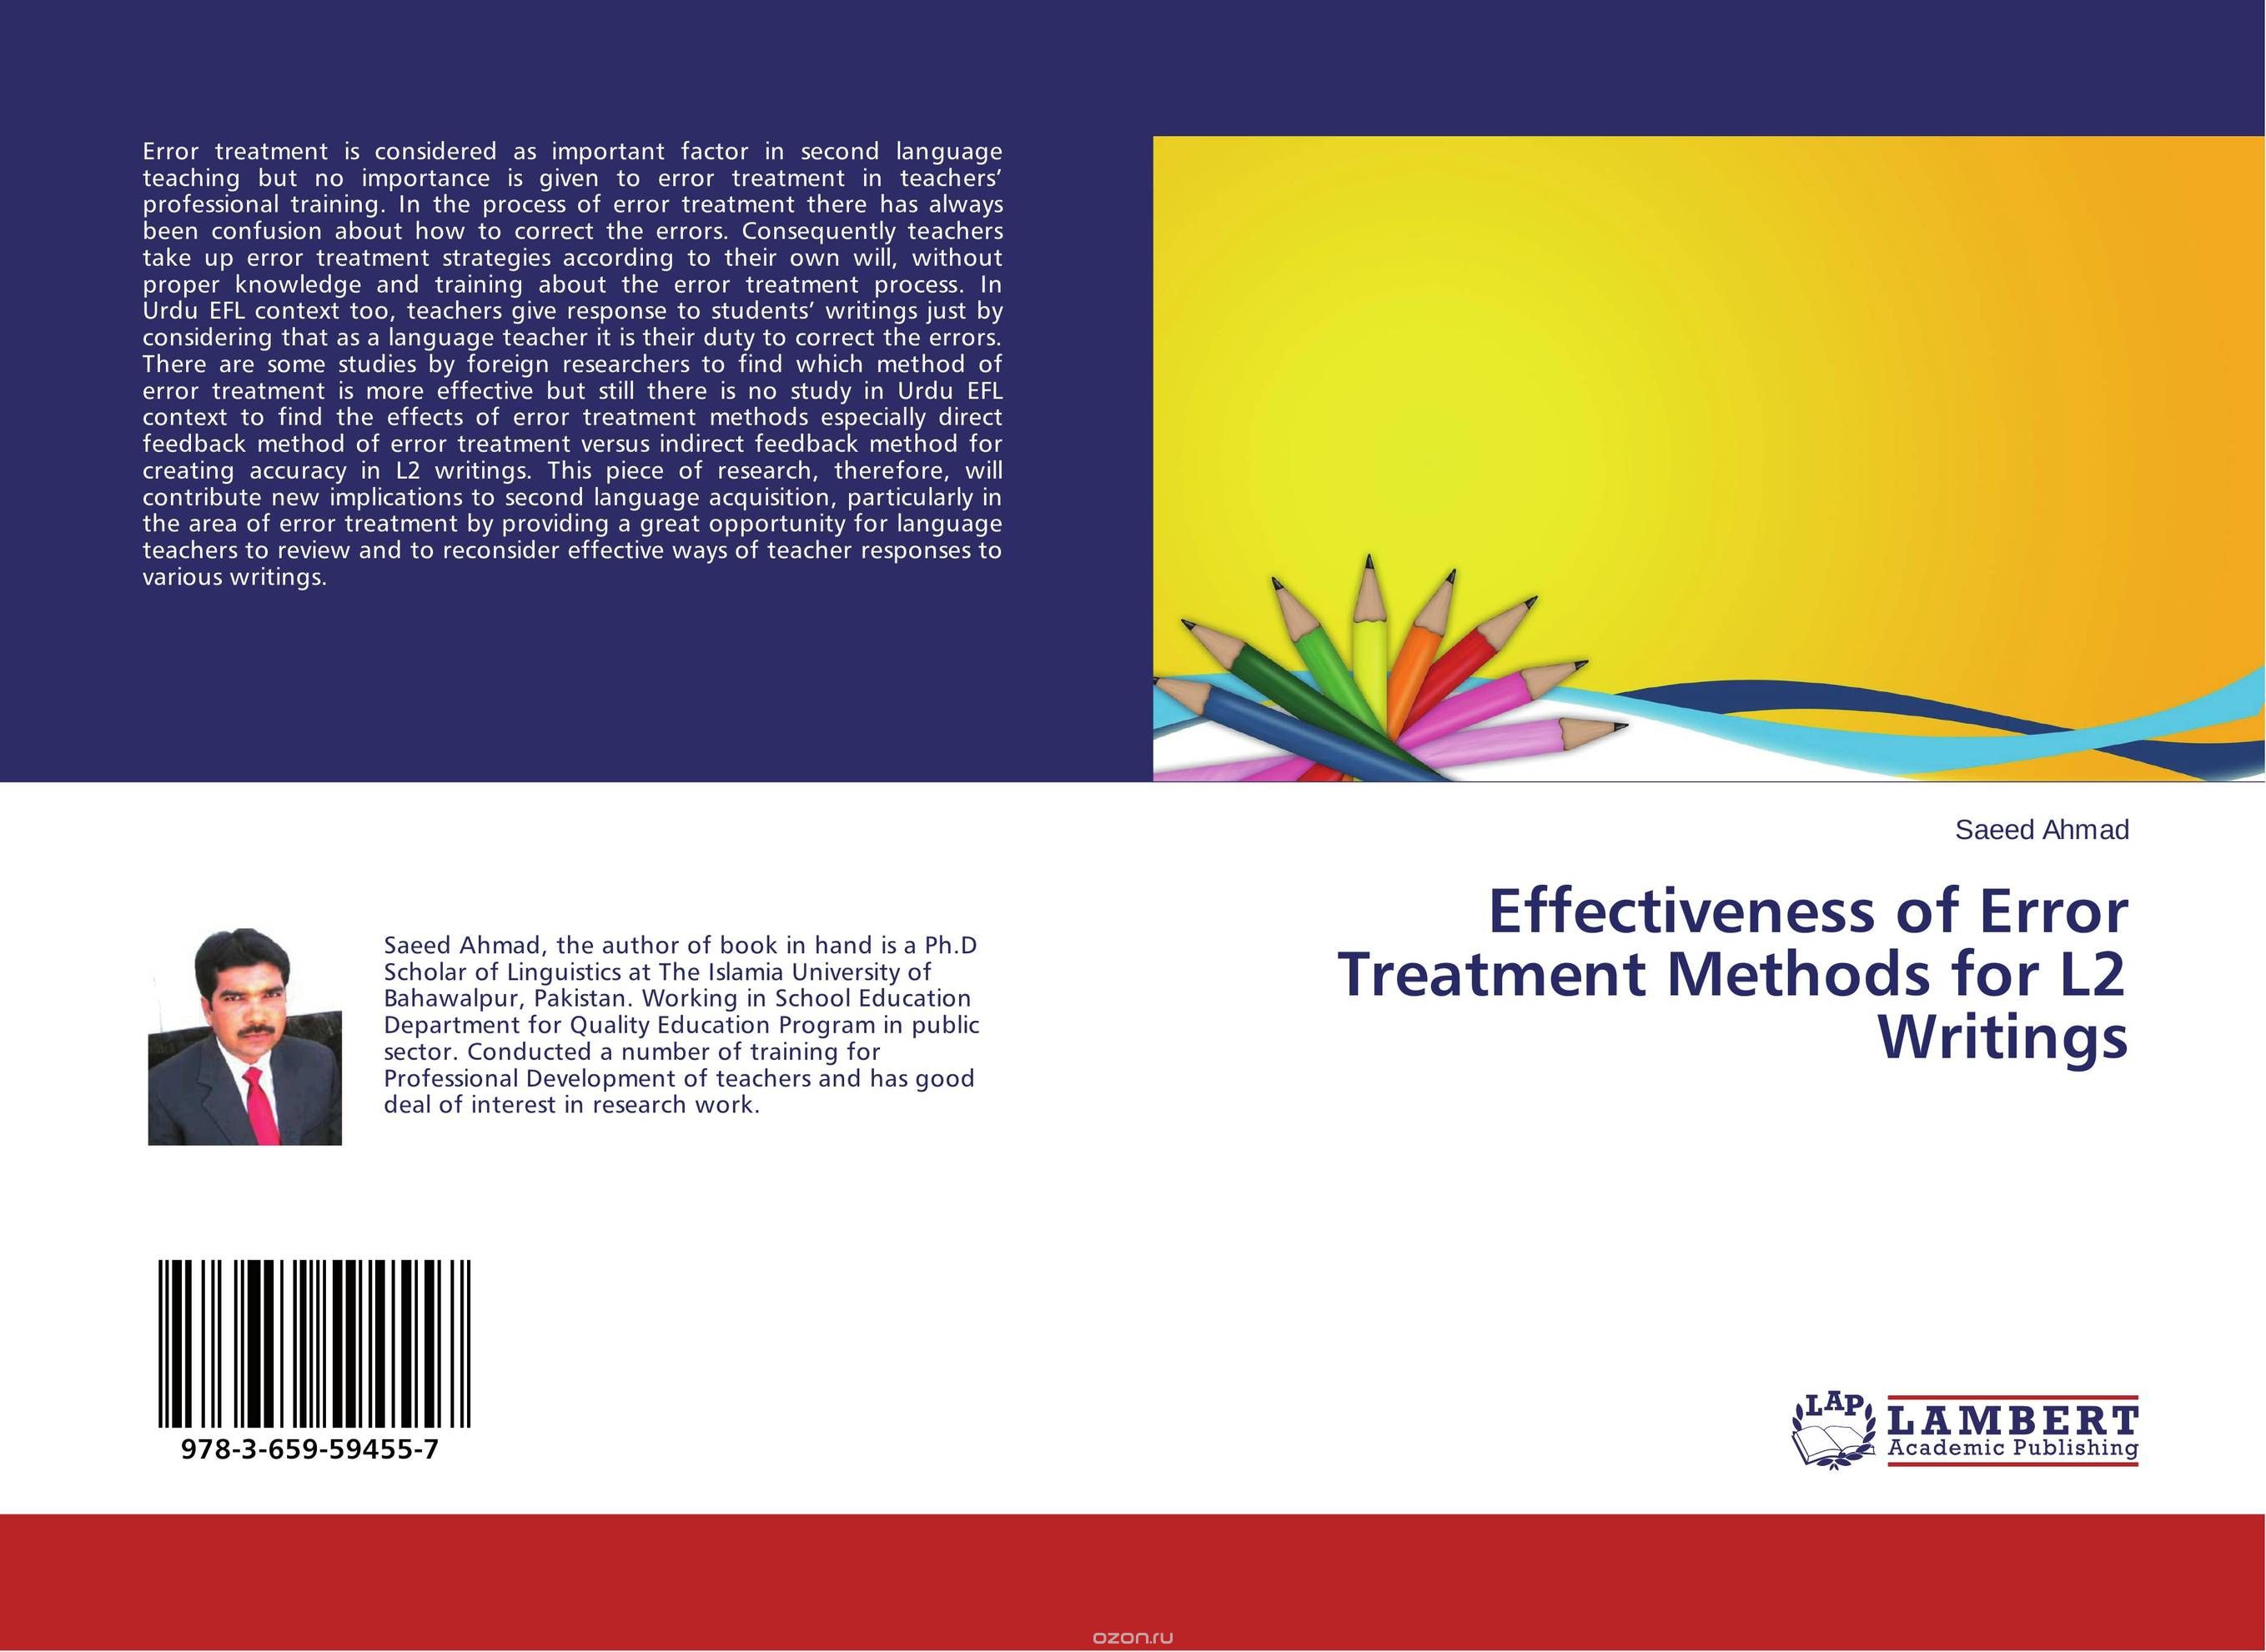 Скачать книгу "Effectiveness of Error Treatment Methods for L2 Writings"